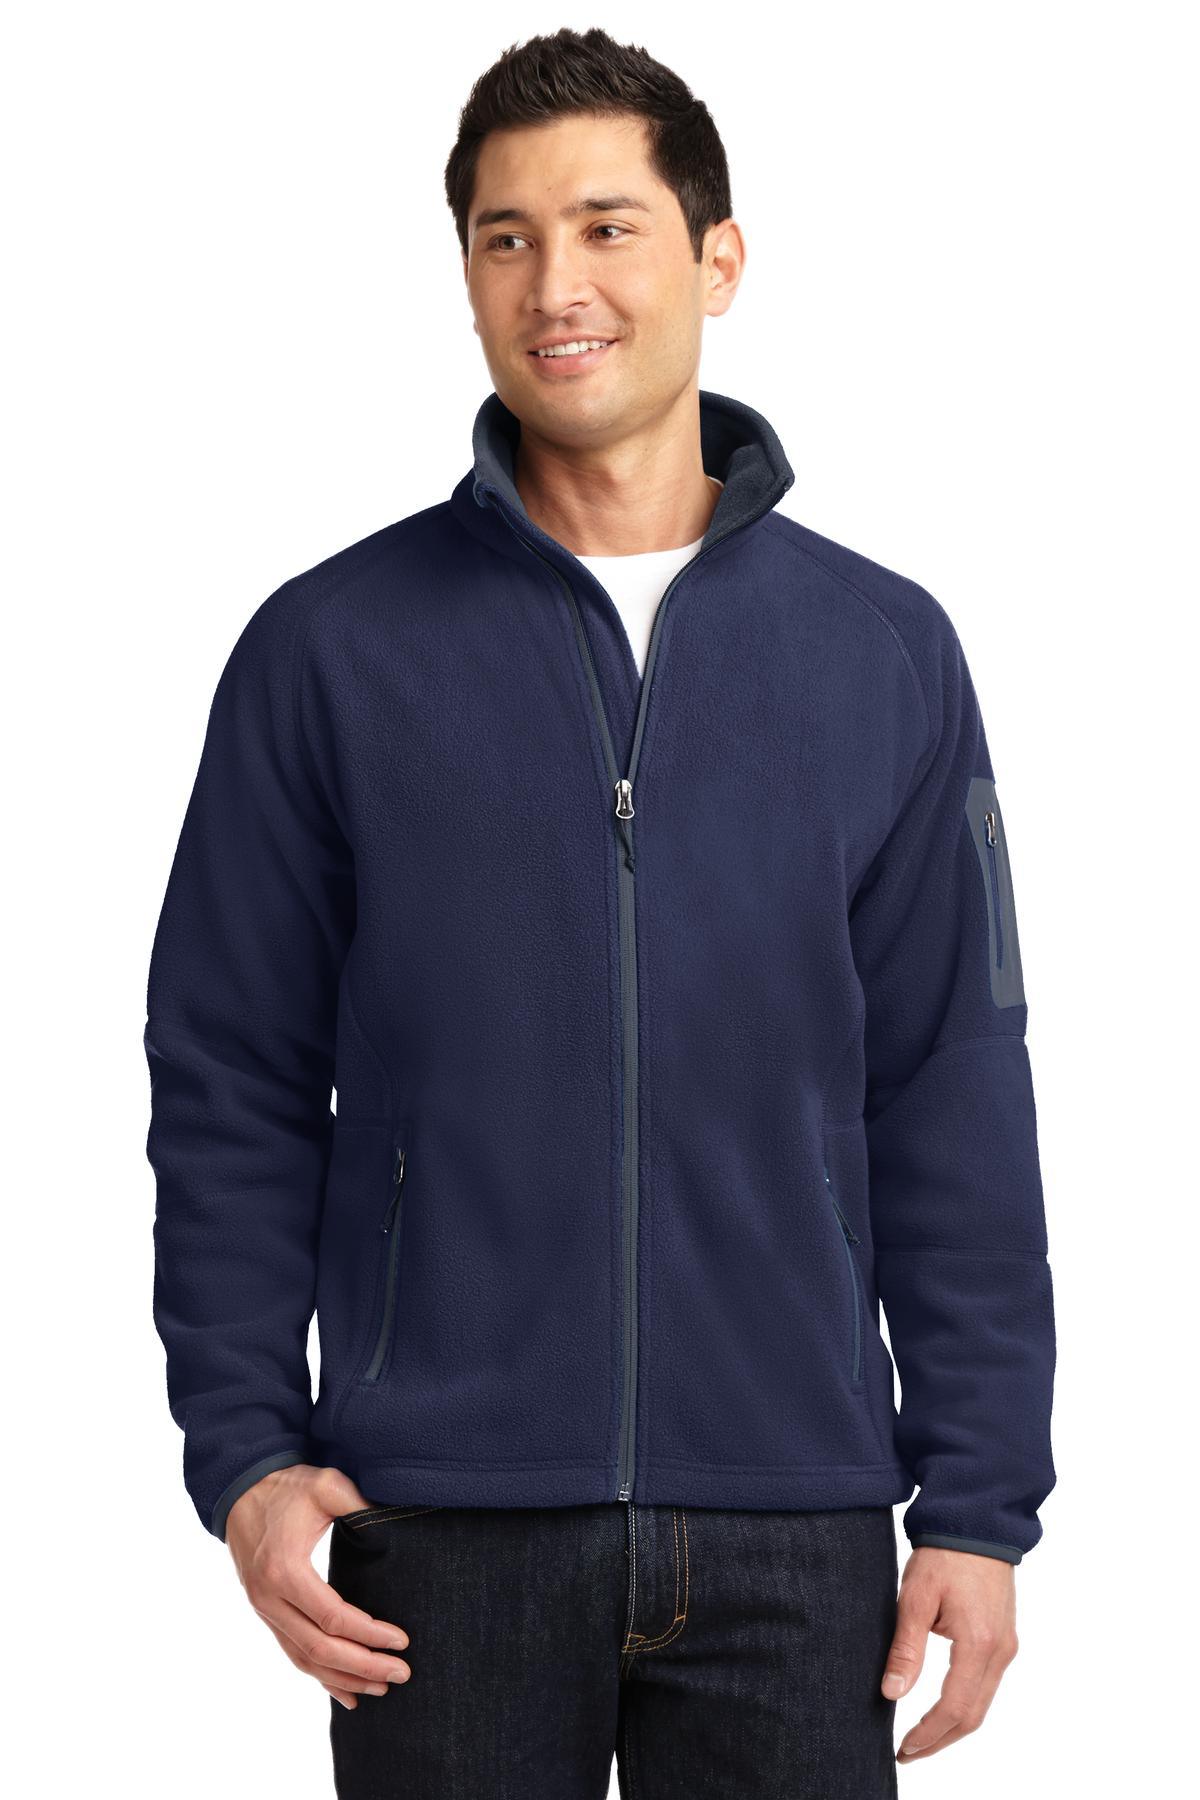 Port Authority Enhanced Value Fleece Full-Zip Jacket. F229 - Dresses Max